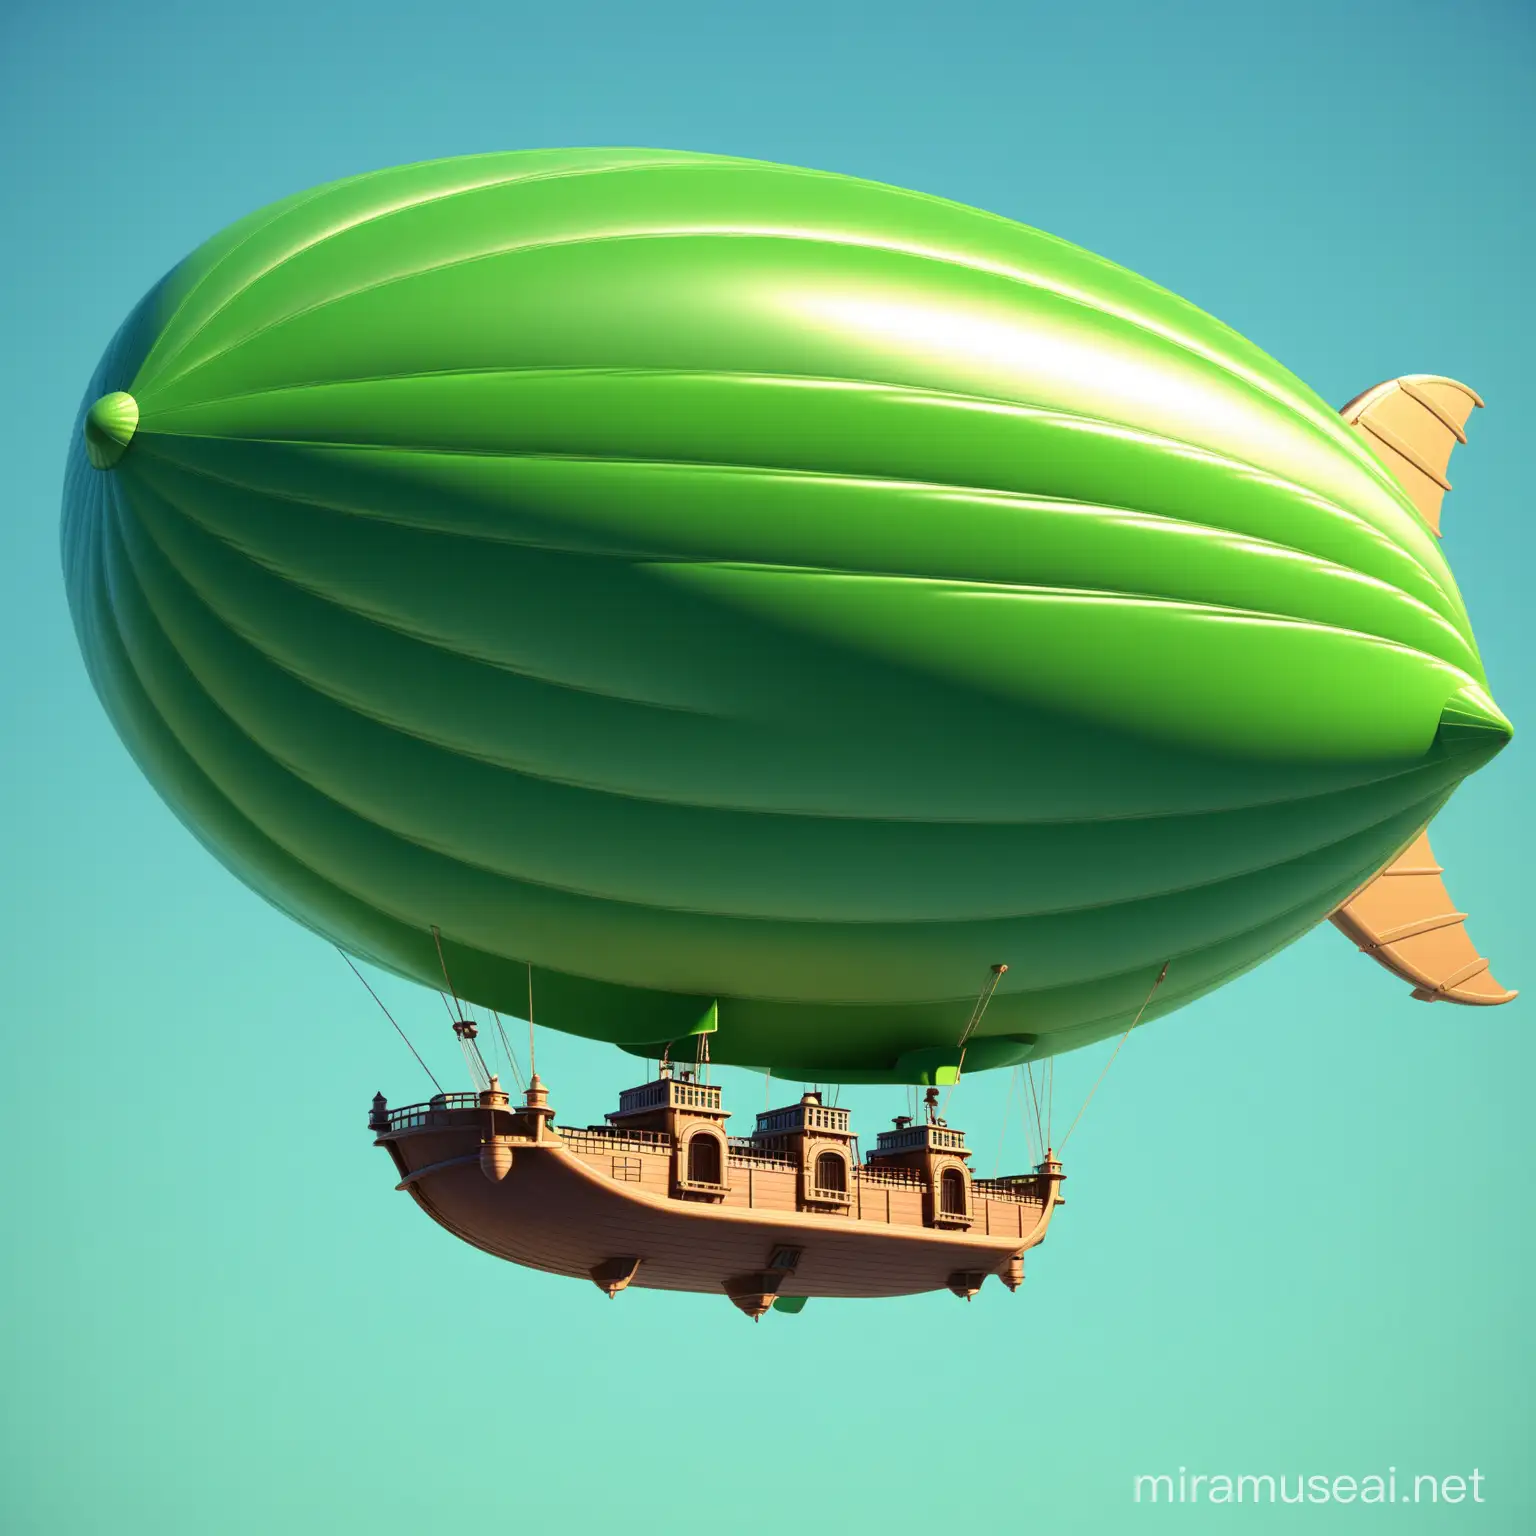 Miniature Green 3D Airship Flying in Surreal Skies